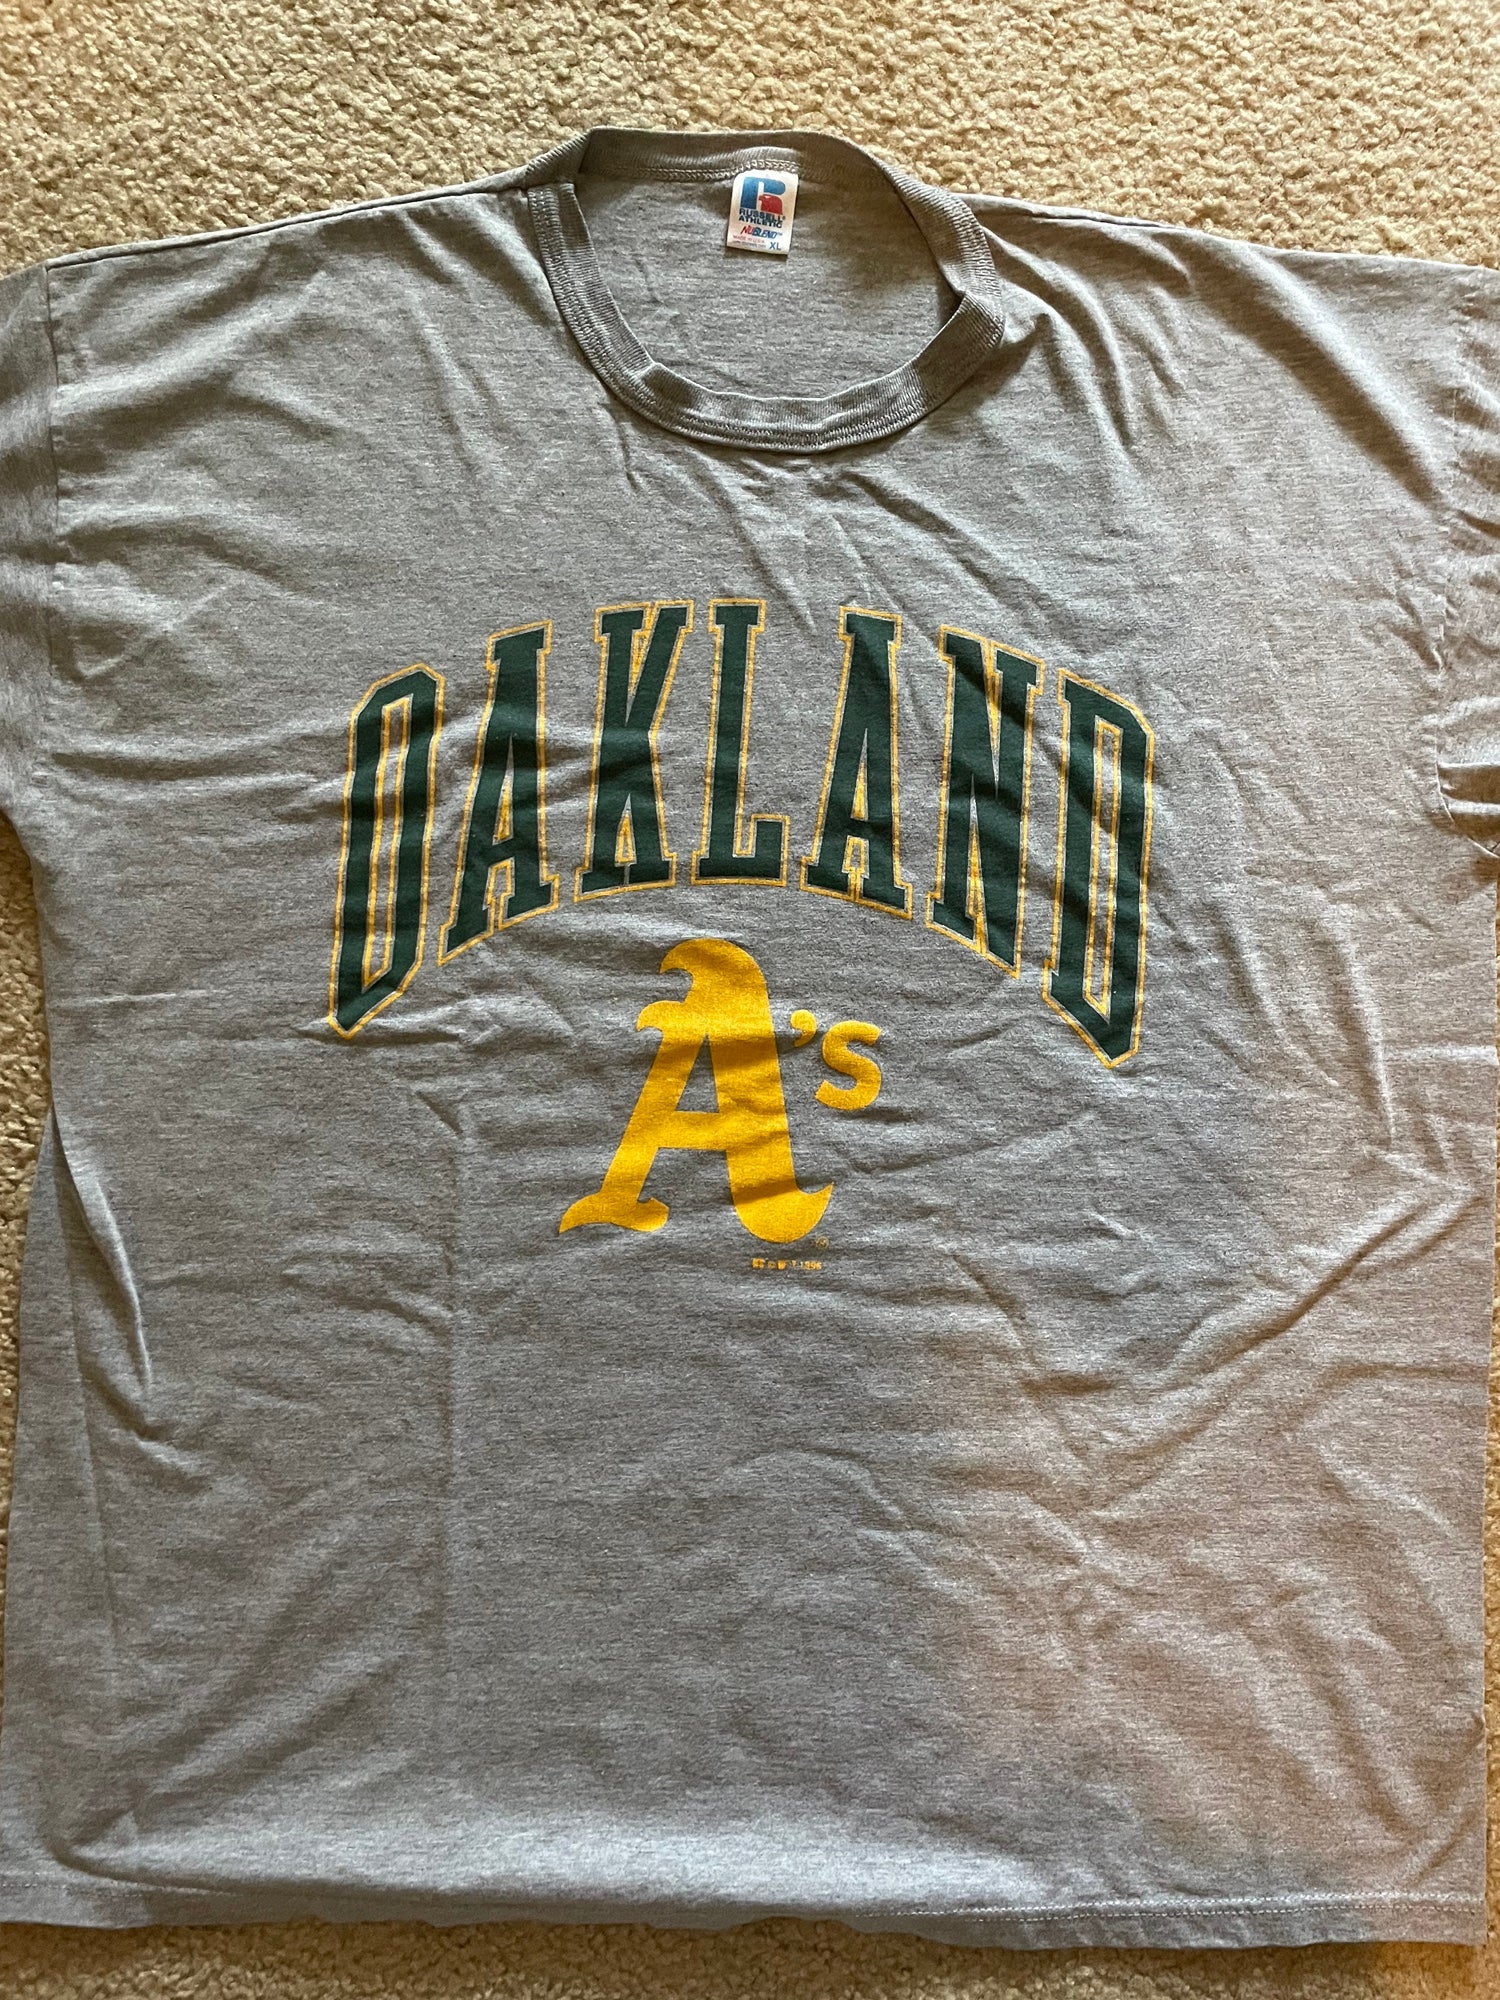 oakland athletics tee shirts